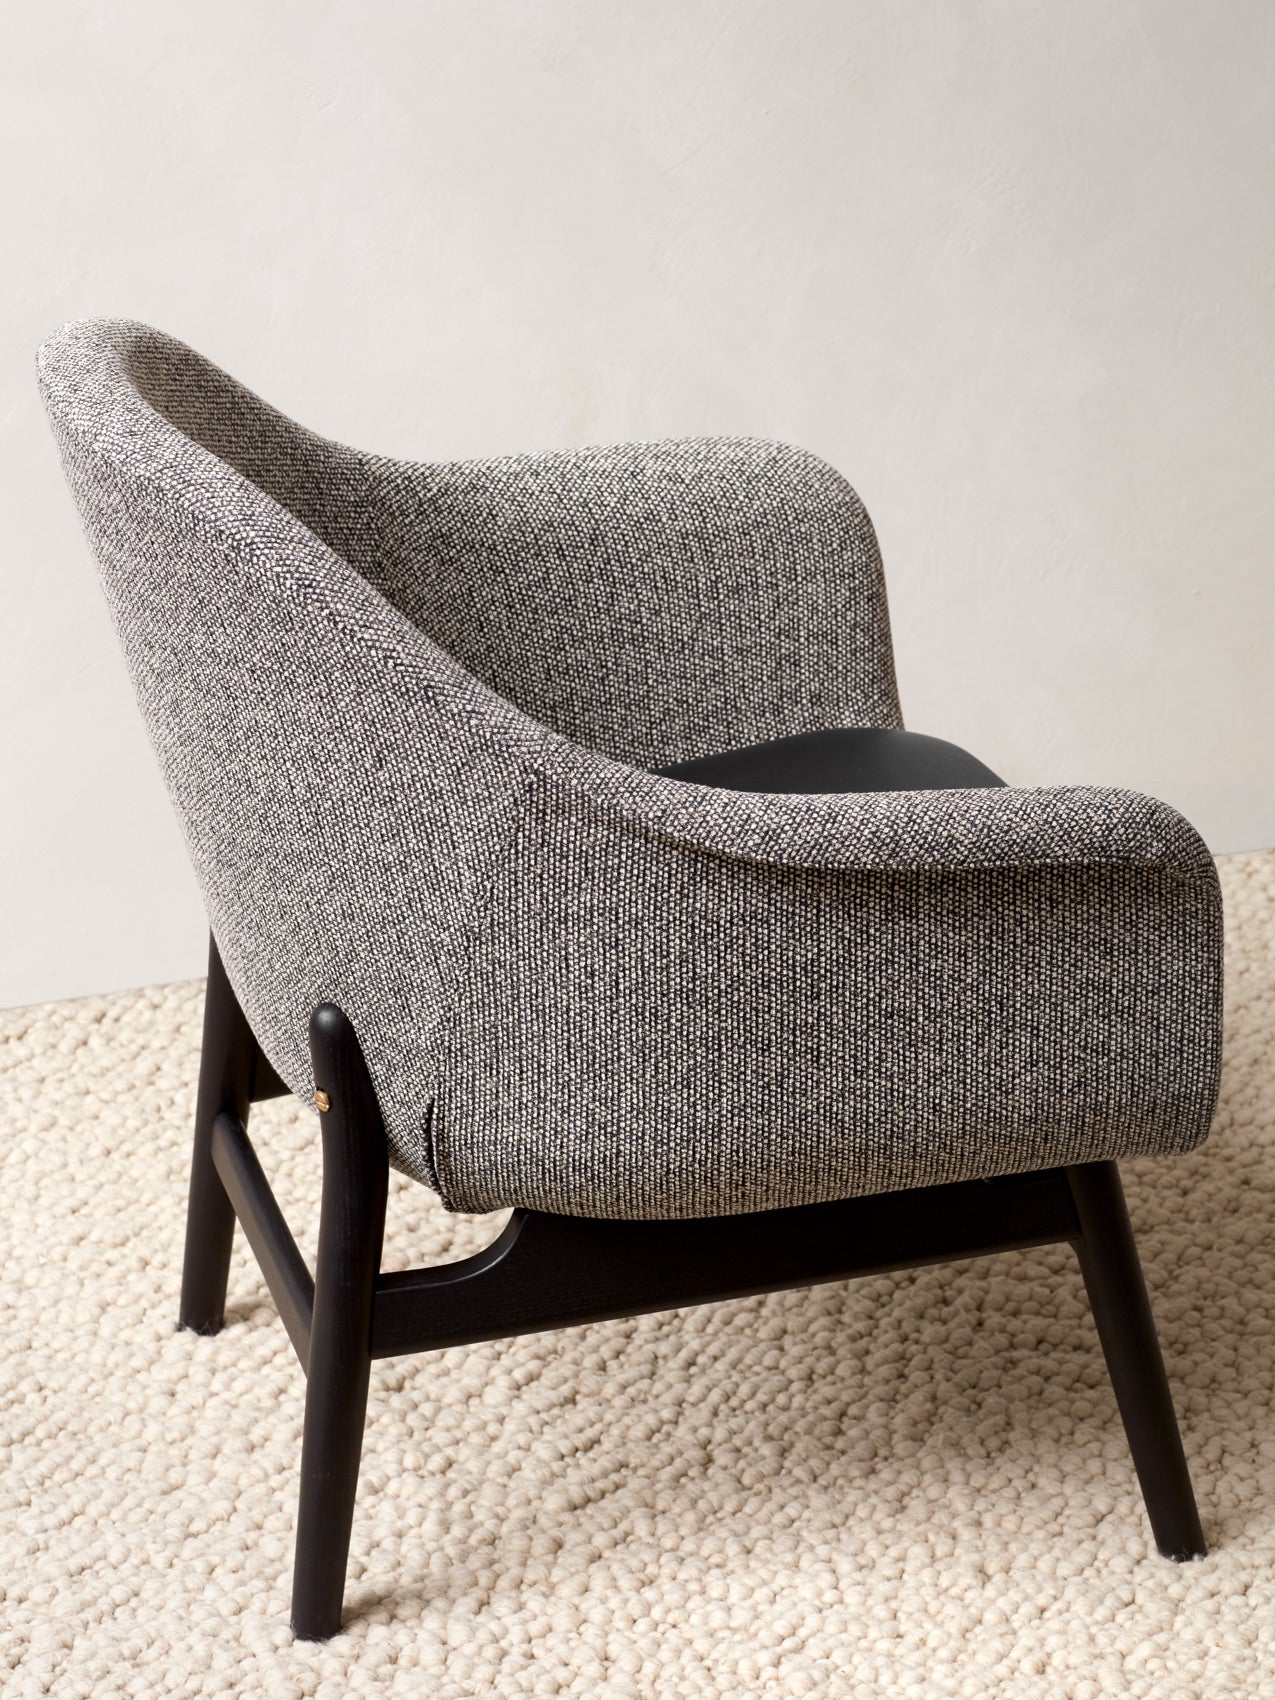 Harbour Lounge Chair-Lounge Chair-Norm Architects-menu-minimalist-modern-danish-design-home-decor